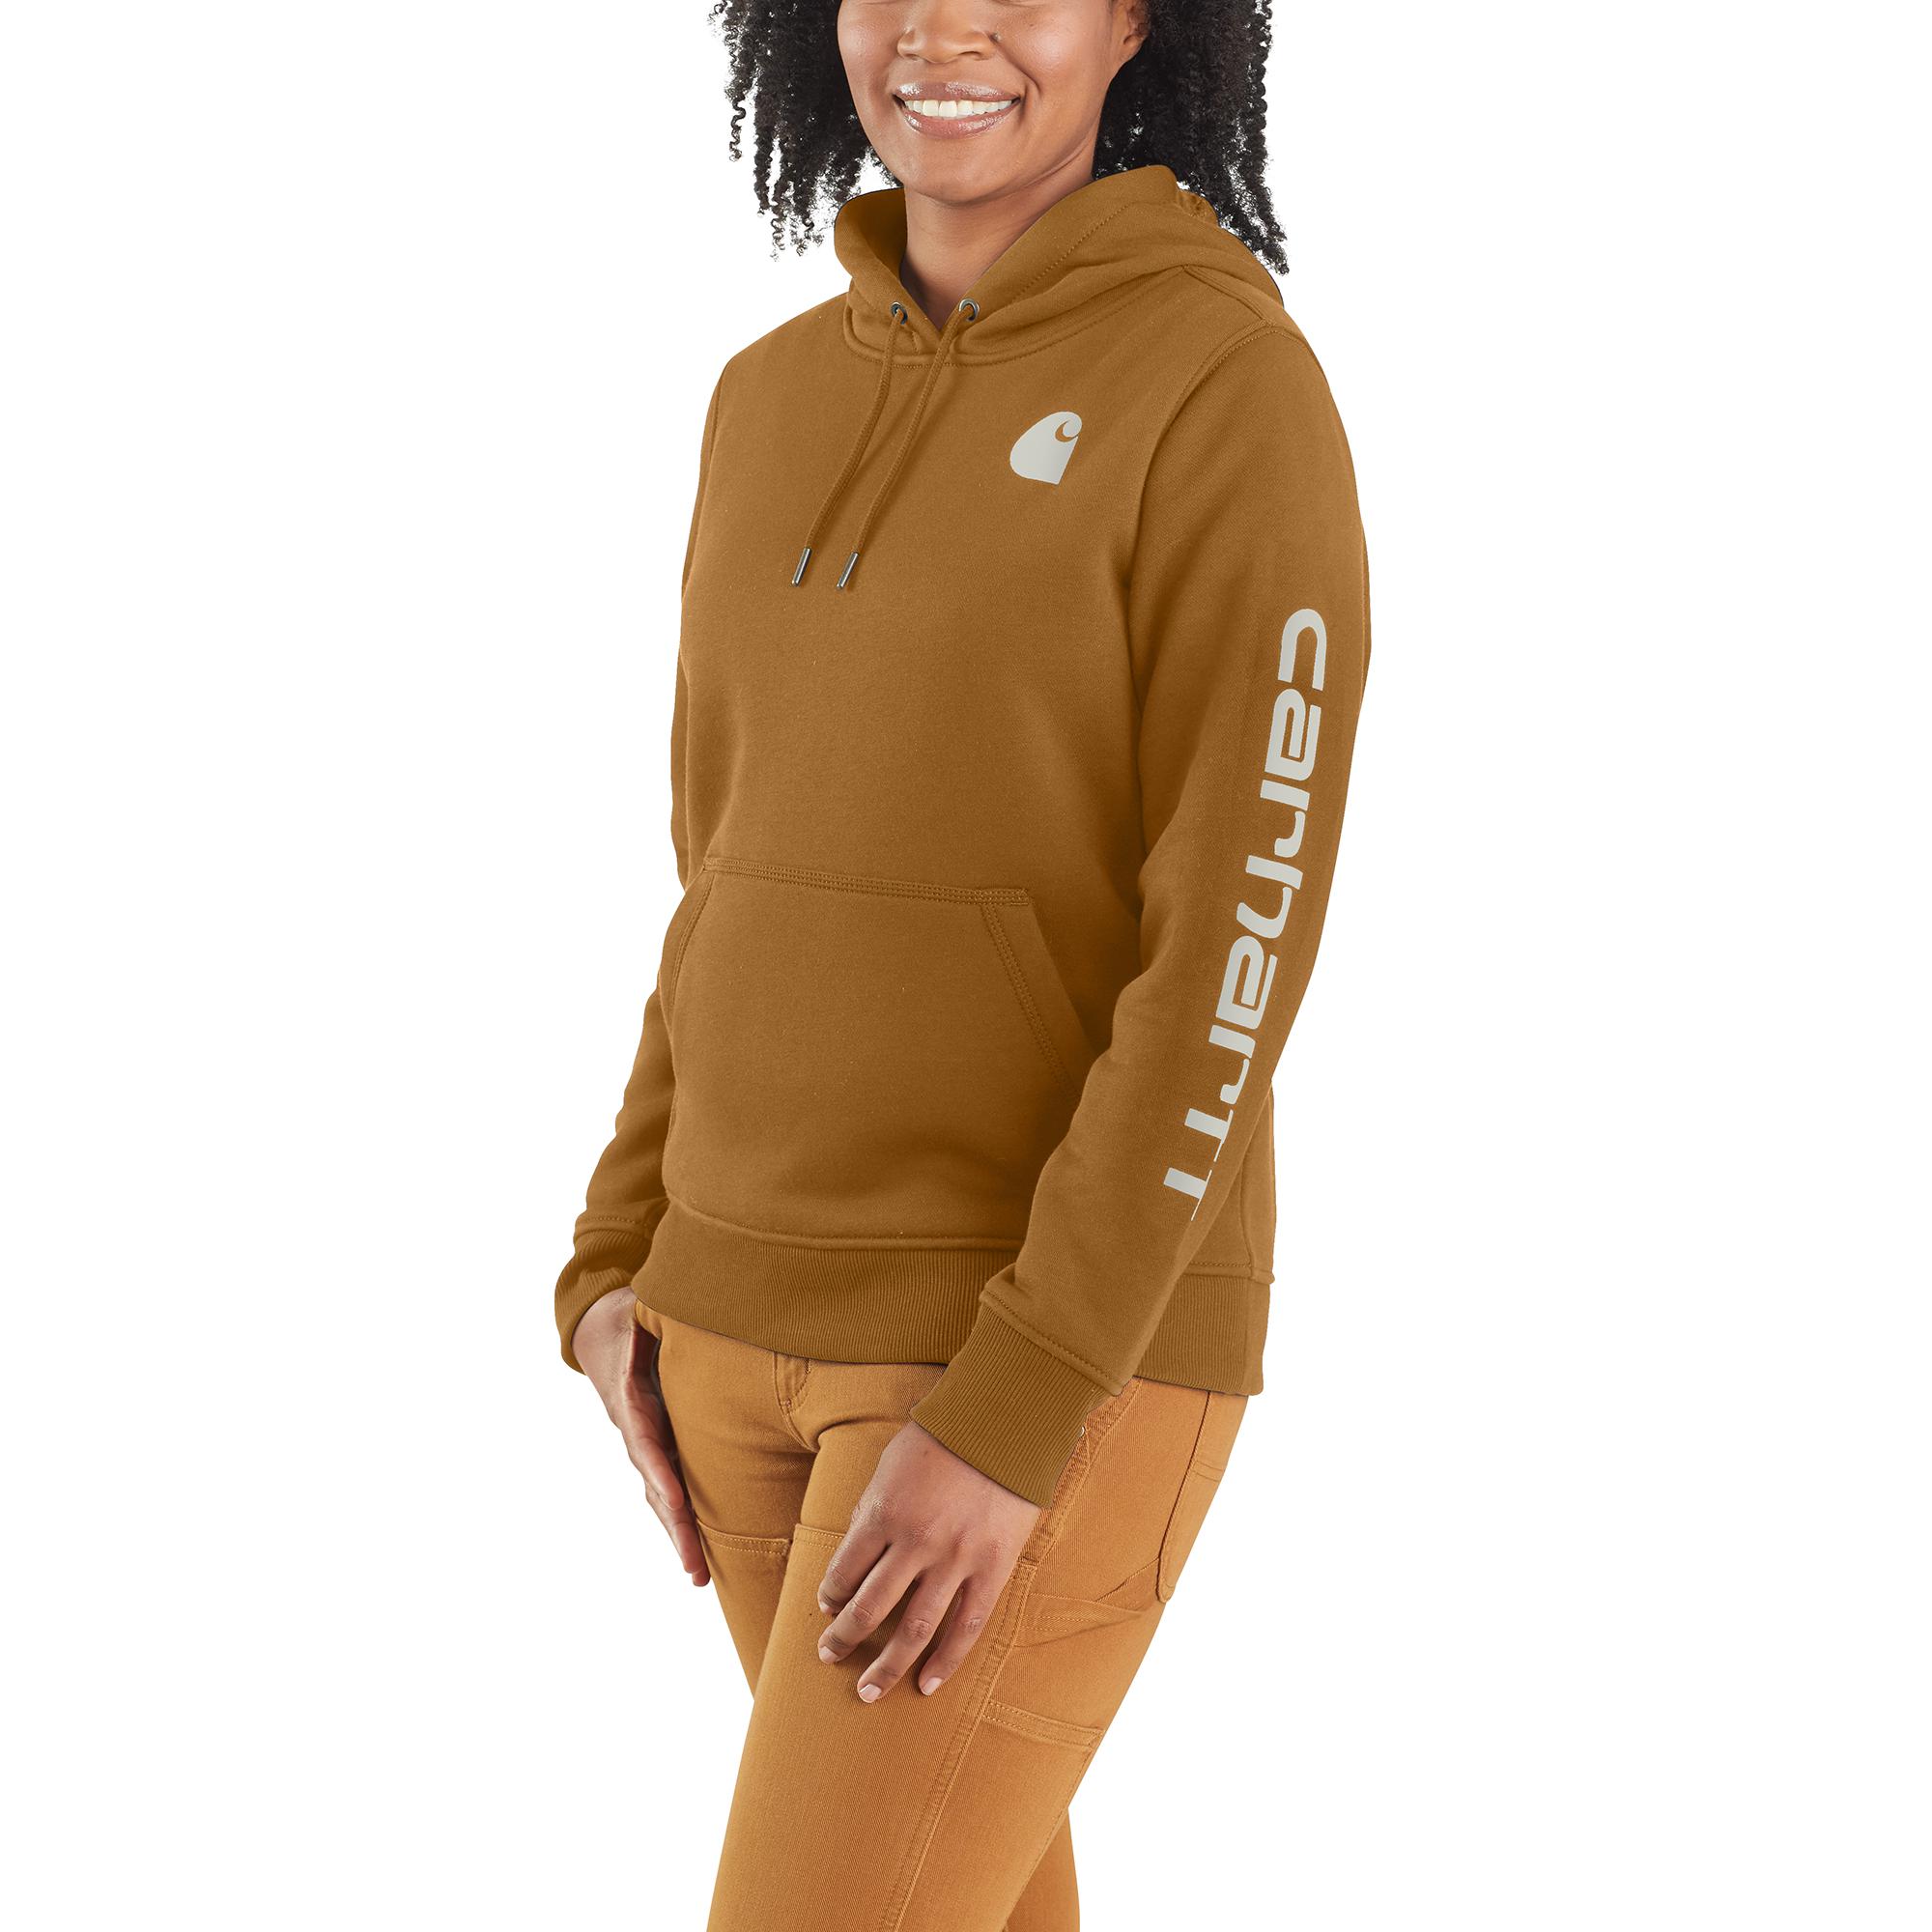 Carhartt Women's Fleece Long Sleeve Sweatshirt (Large)